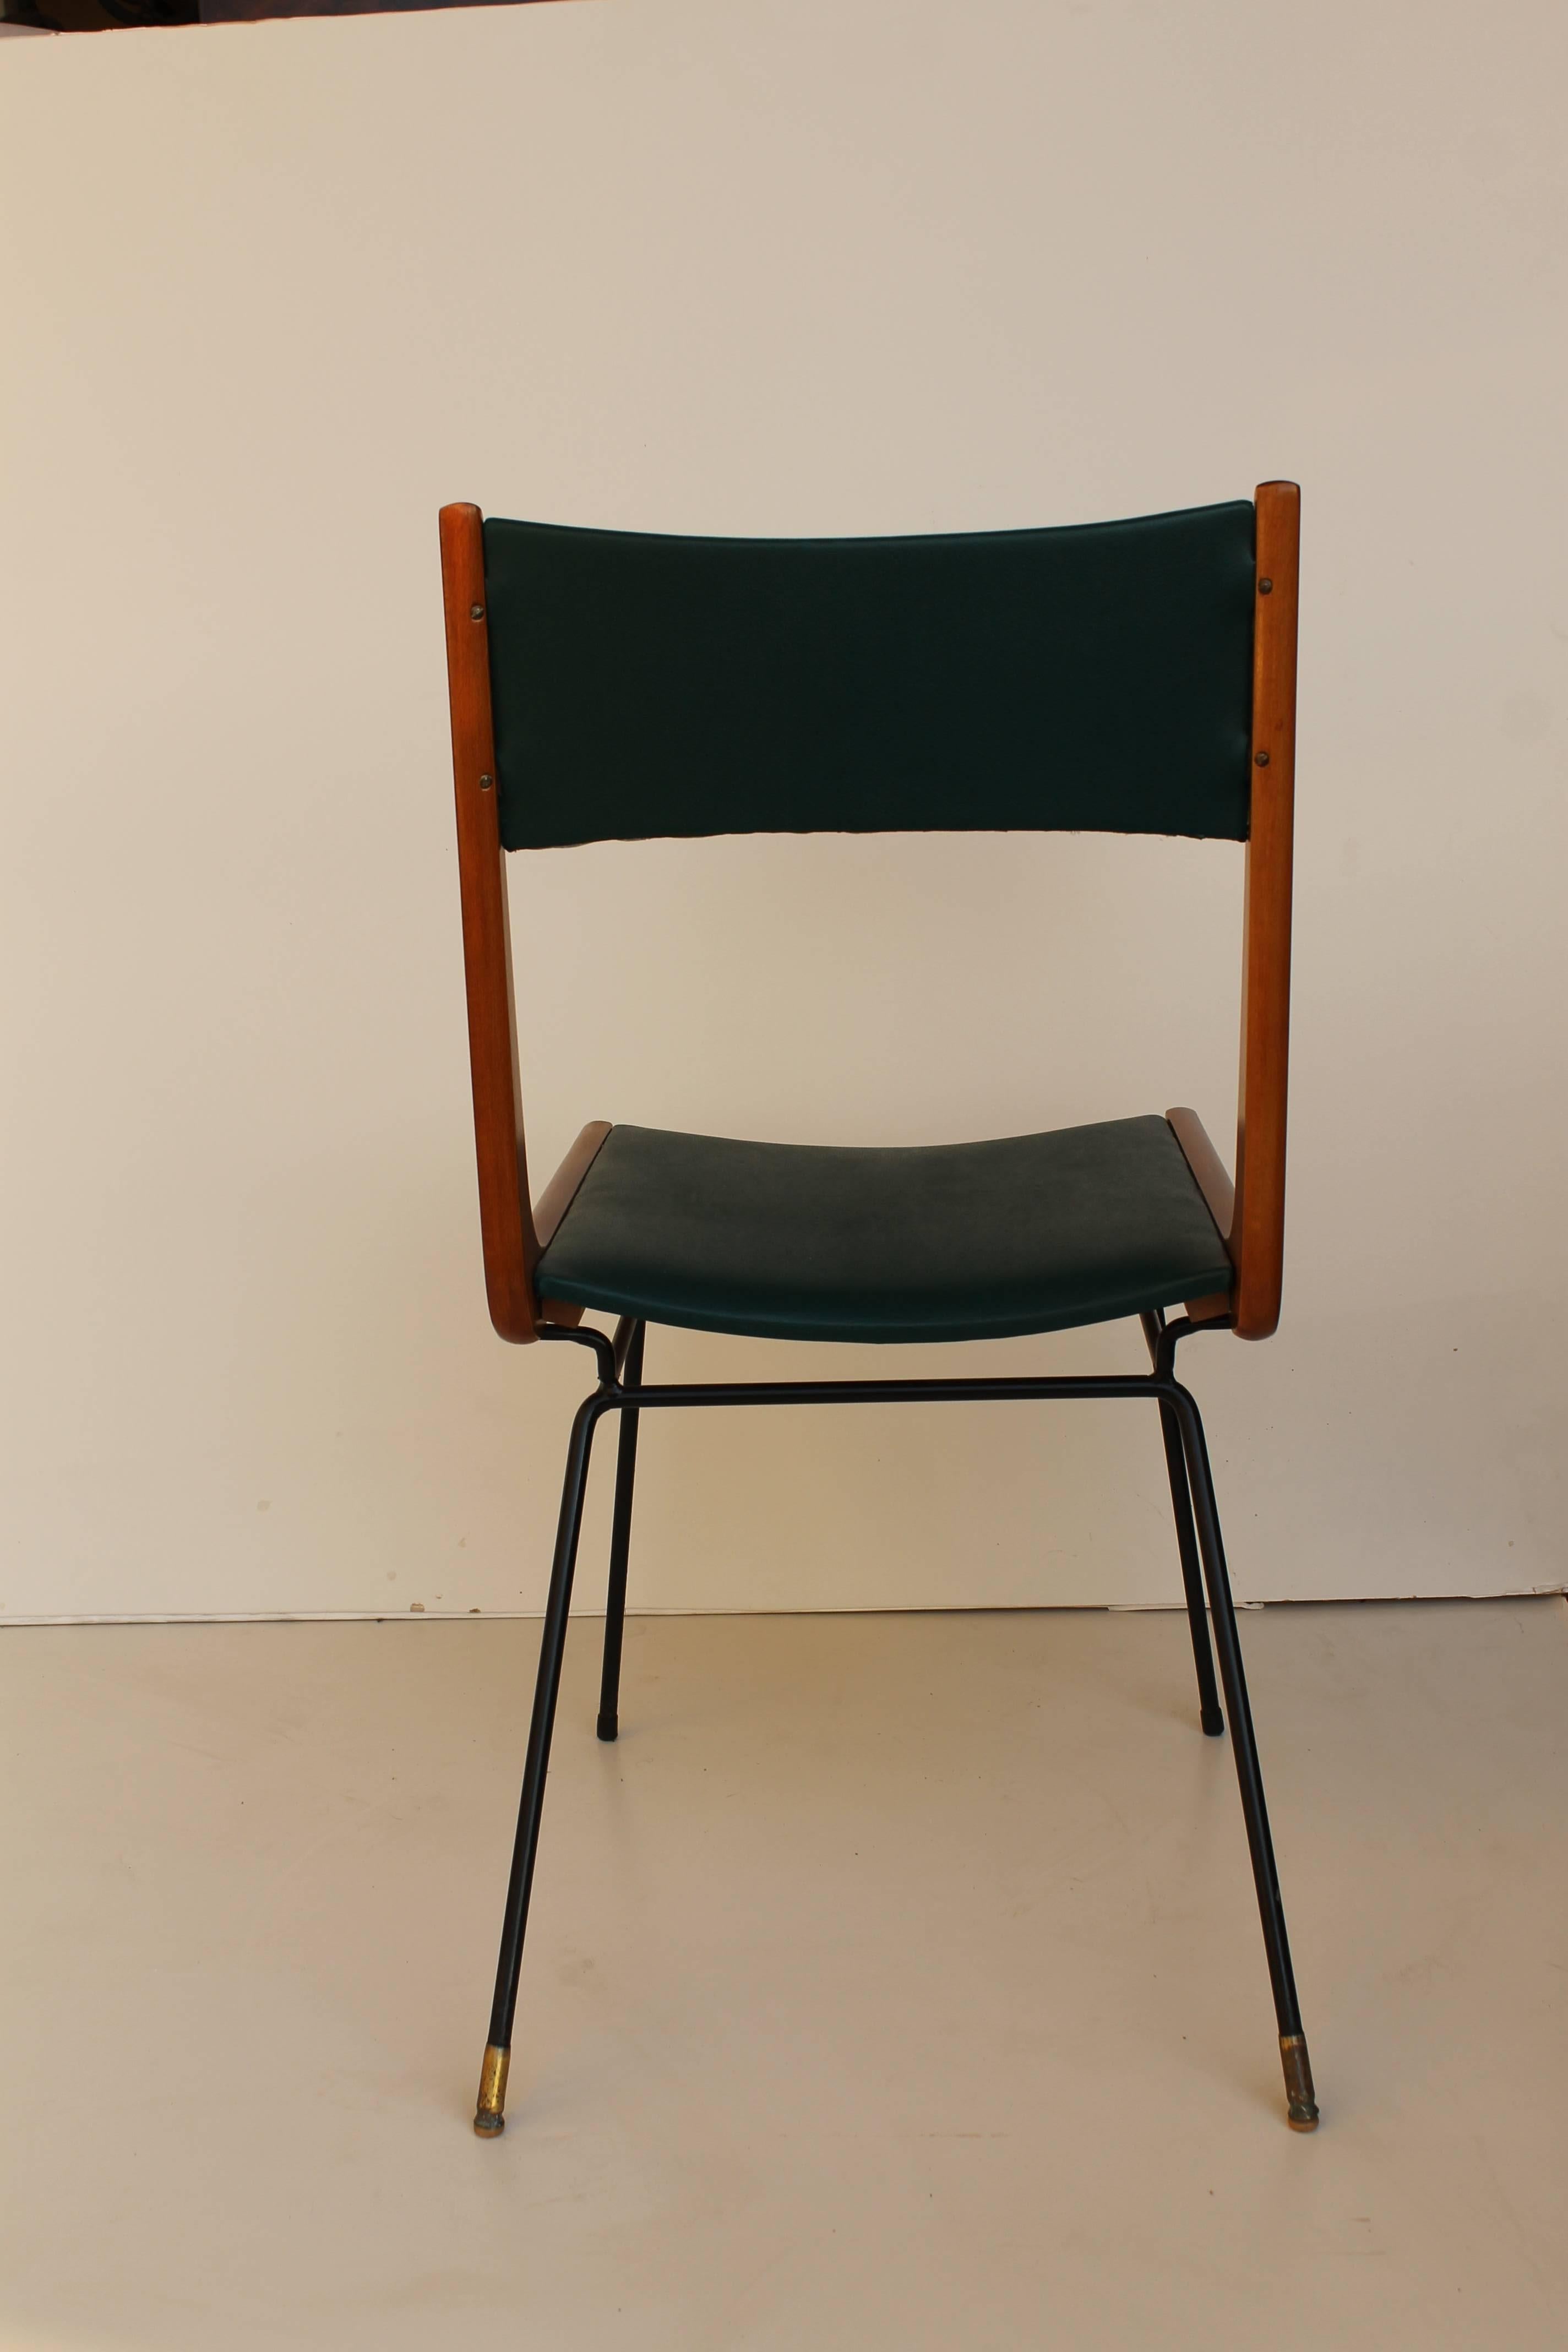 Schöner Bumerang-Stuhl von Carlo de Carli.

 